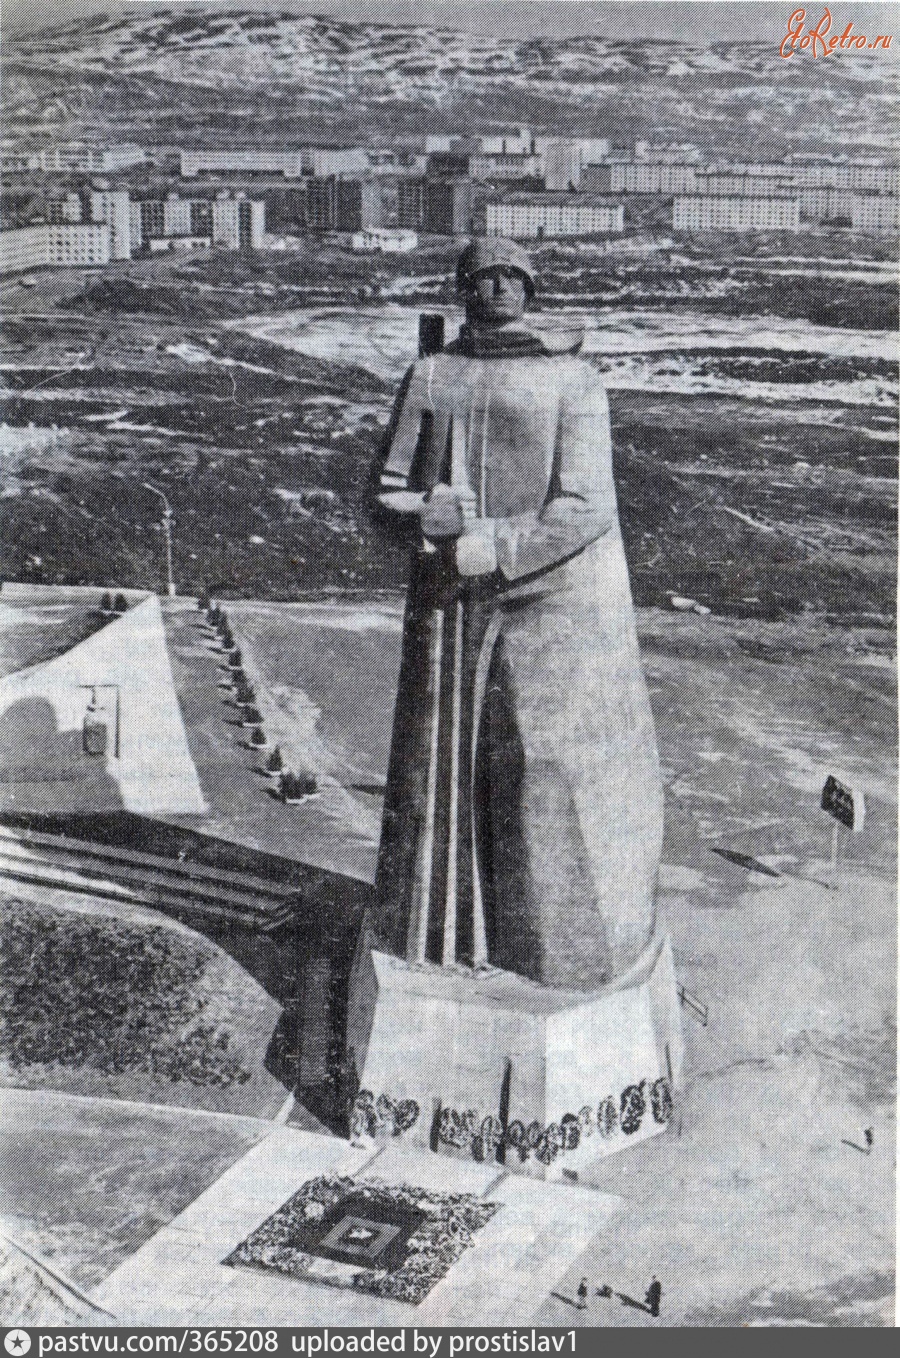 Стройка памятника Алеше Мурманск